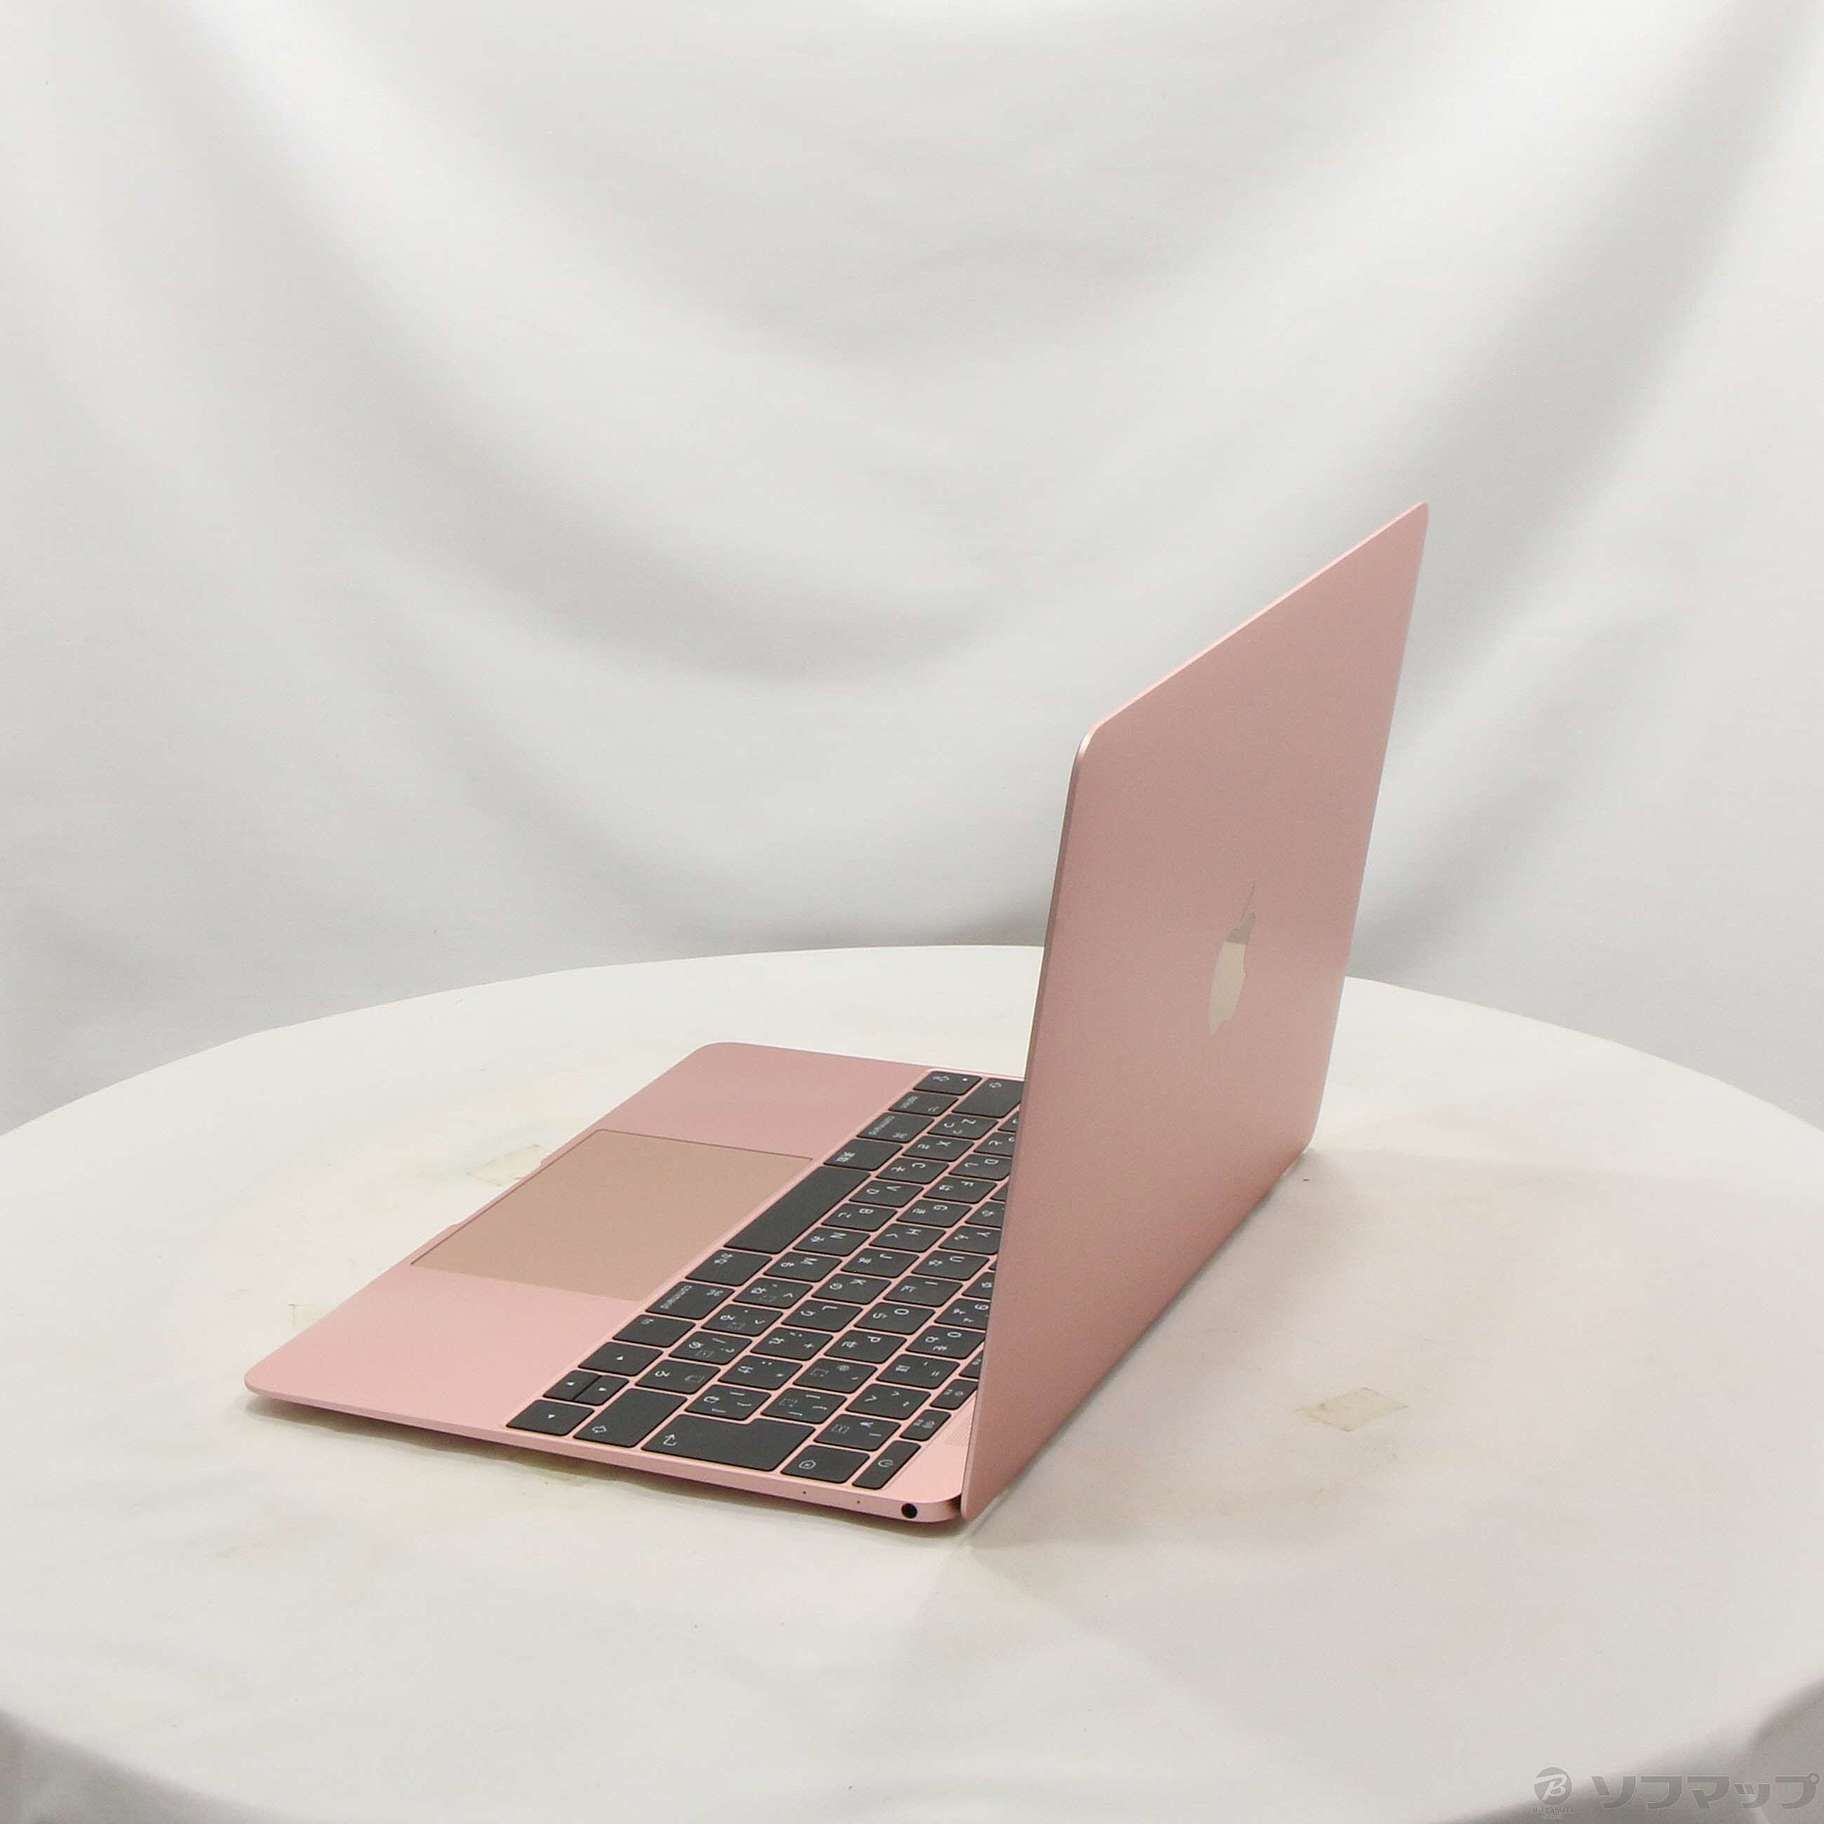 中古】MacBook 12-inch Mid 2017 MNYM2J／A Core_m3 1.2GHz 8GB